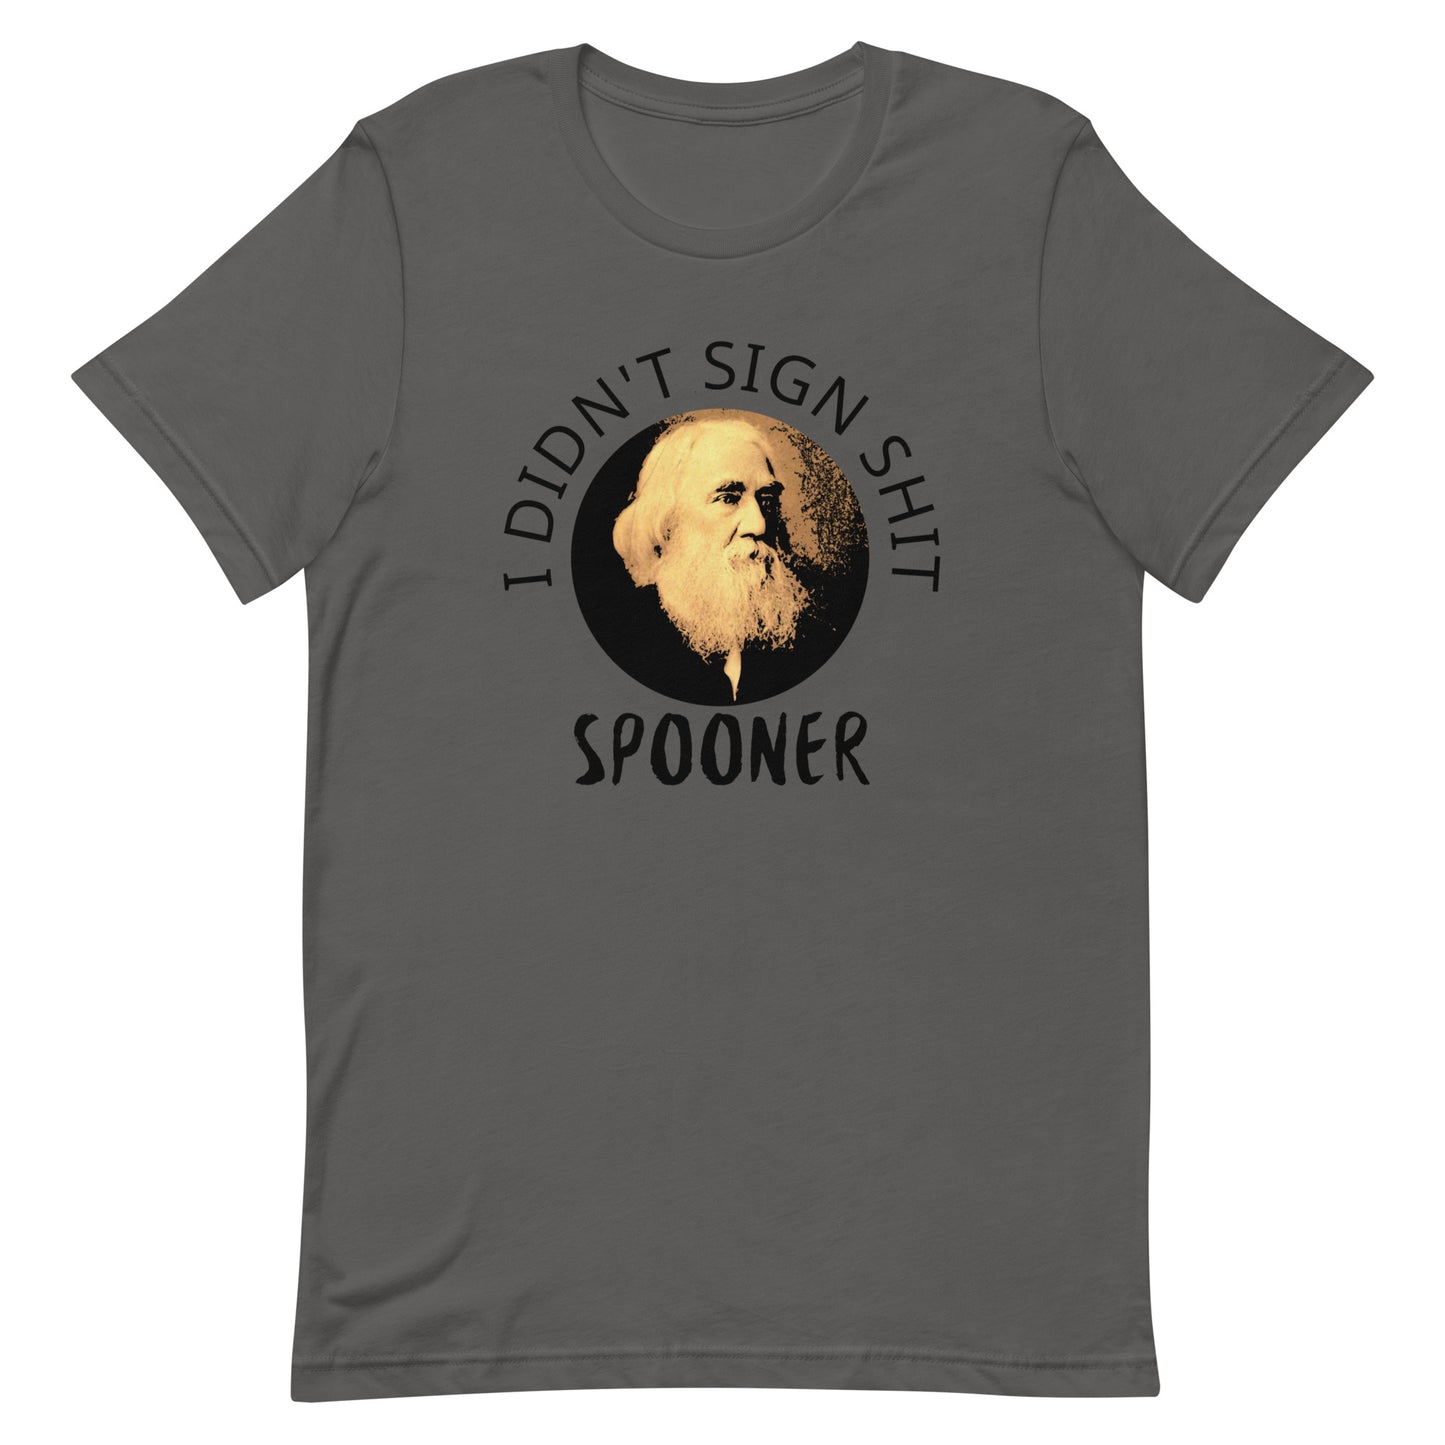 Anarchy Wear "I Didn't Sign Shit" Spooner Unisex t-shirt